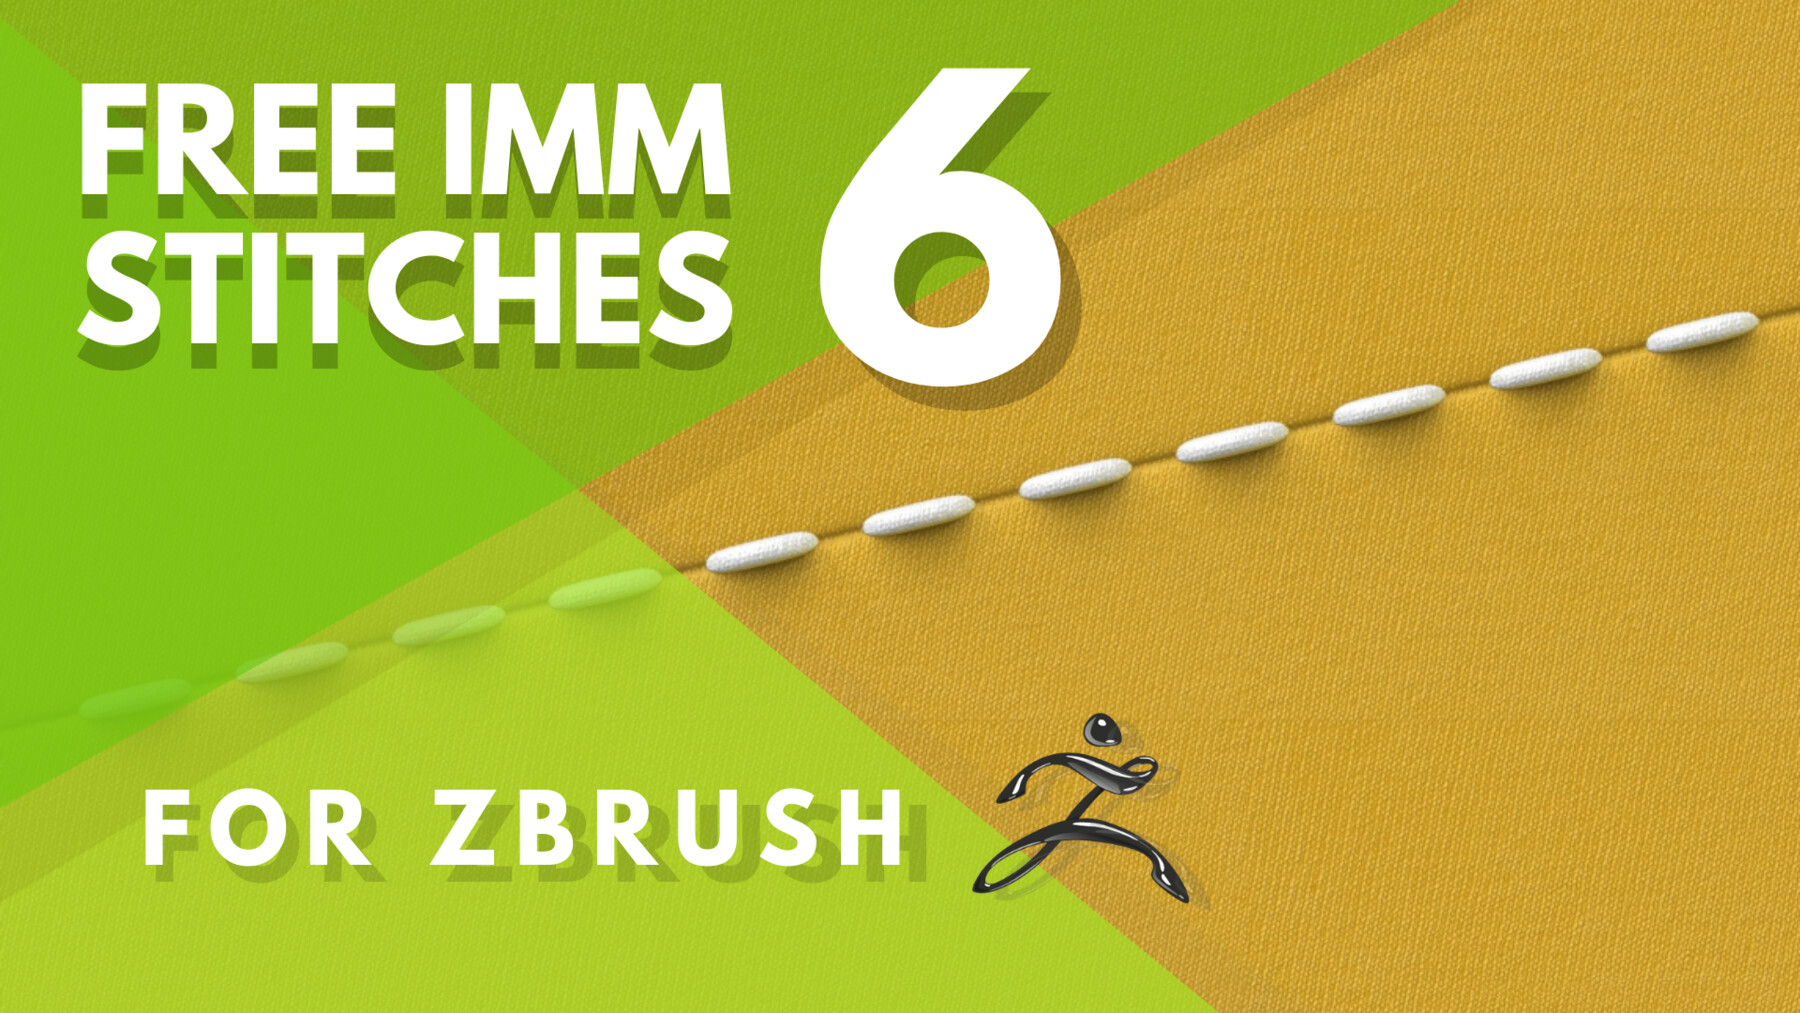 stitching brush zbrush free